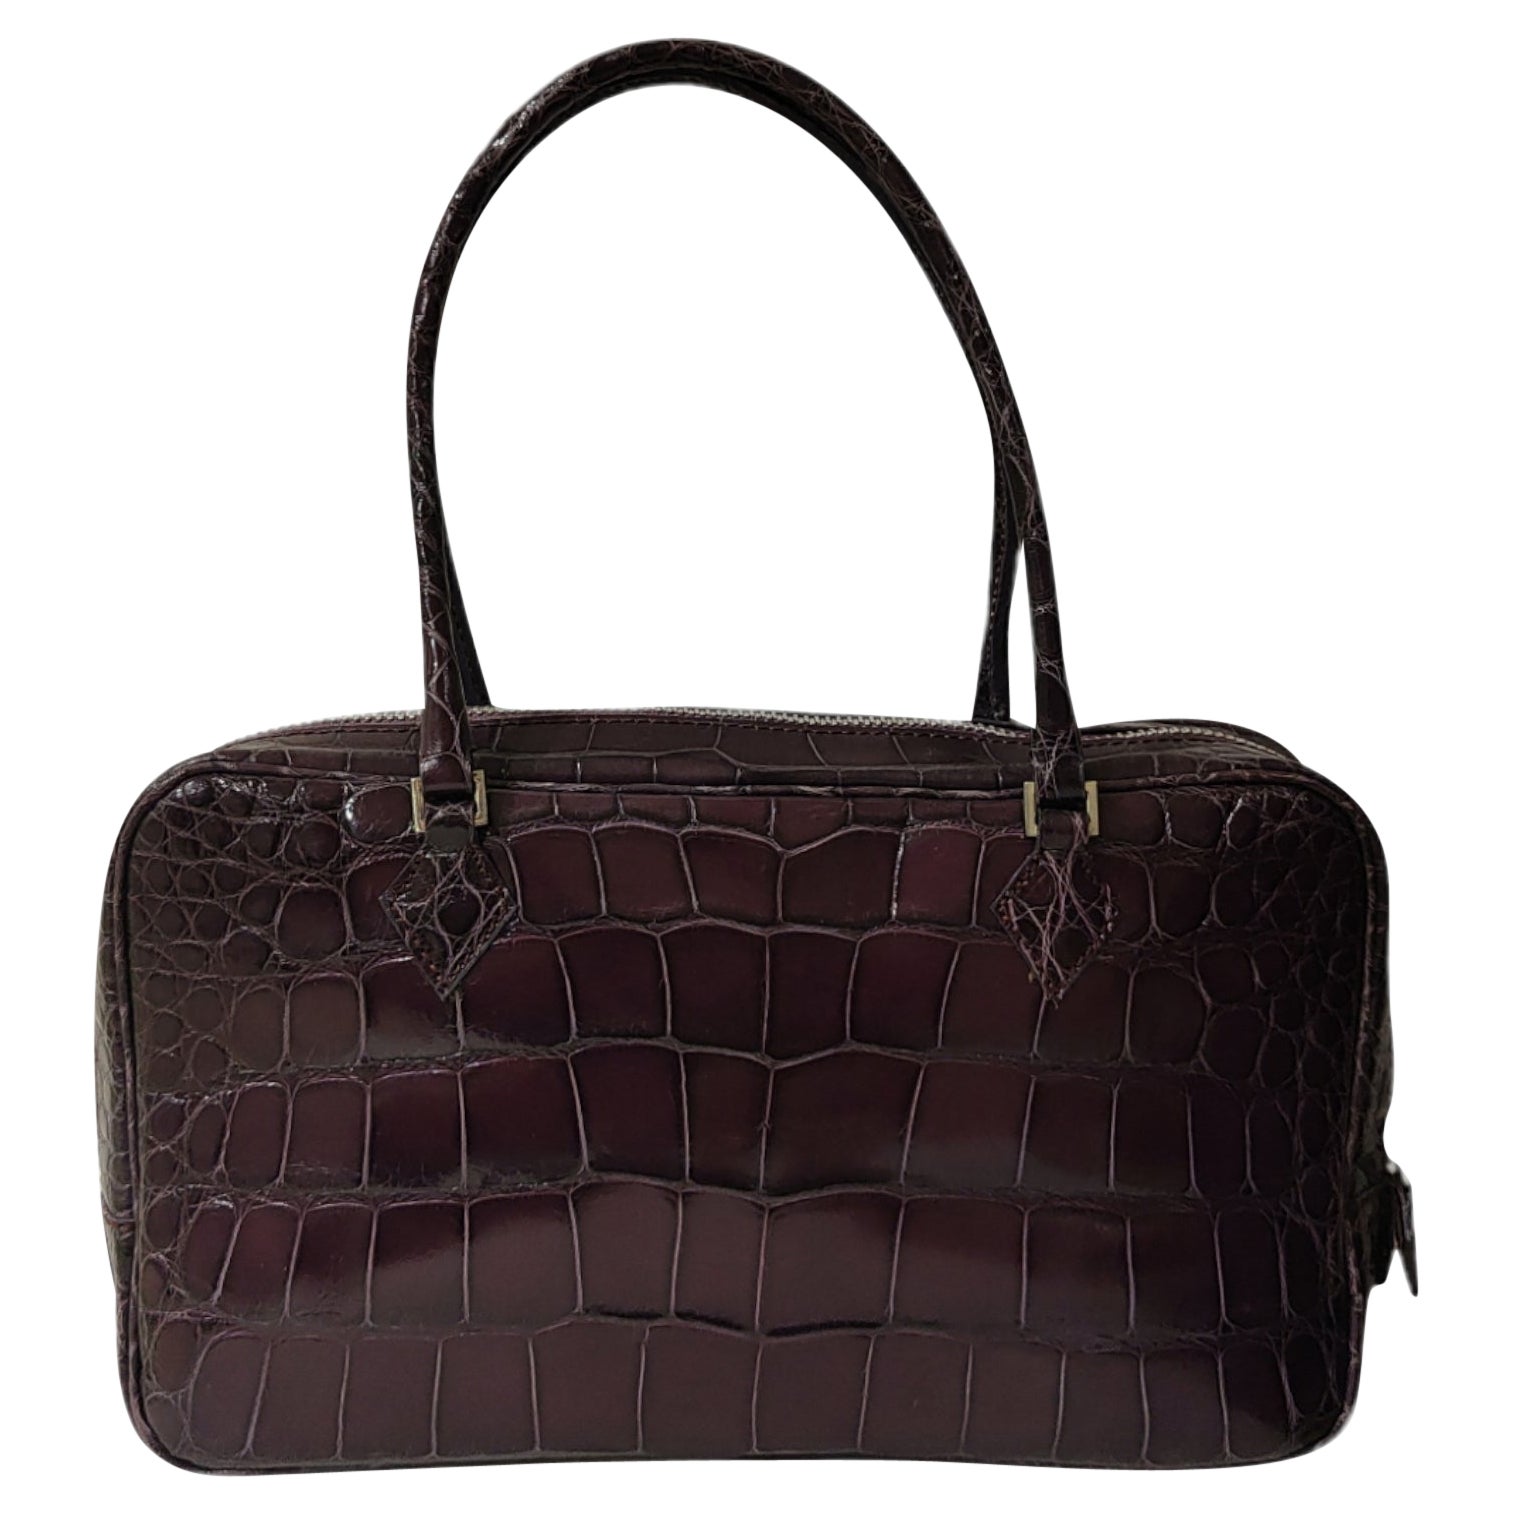 Sirni purple crocodile handbag - shoulder bag